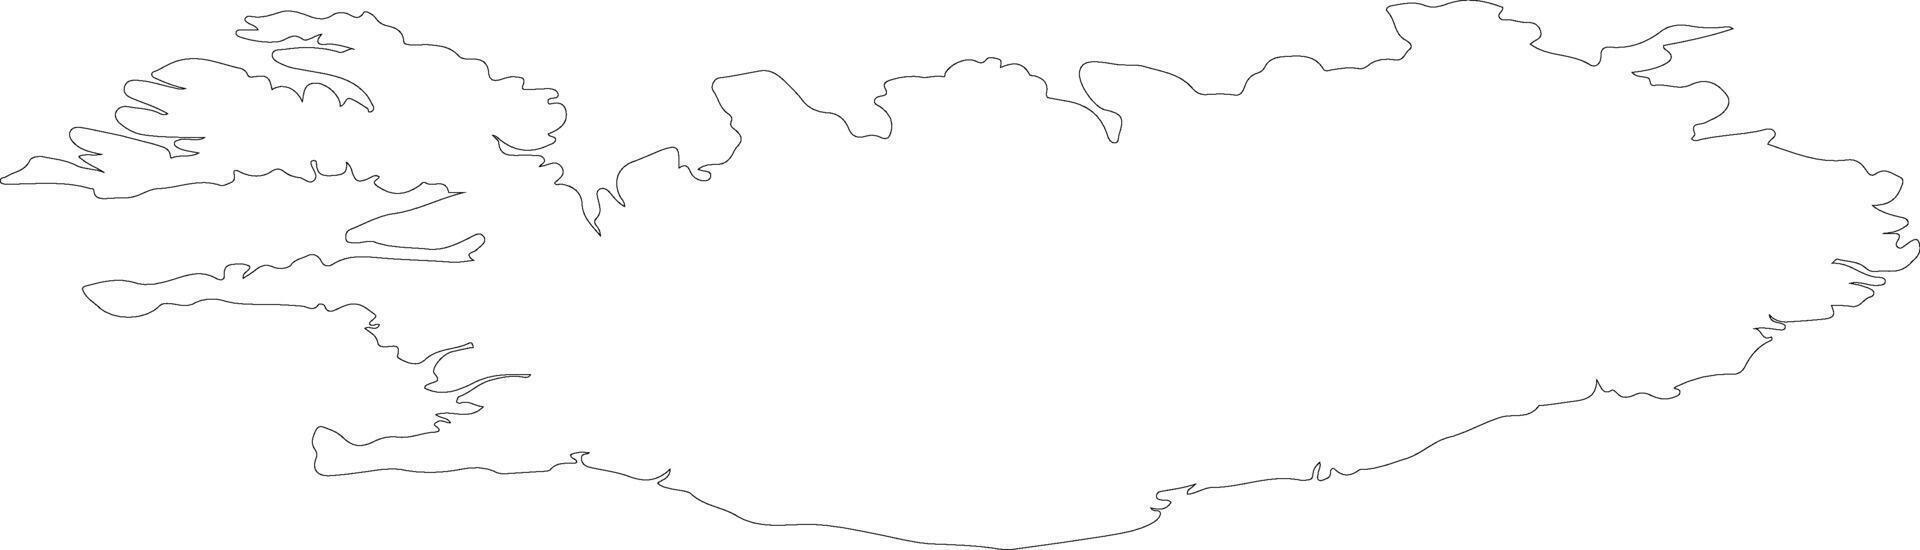 IJsland schets kaart vector